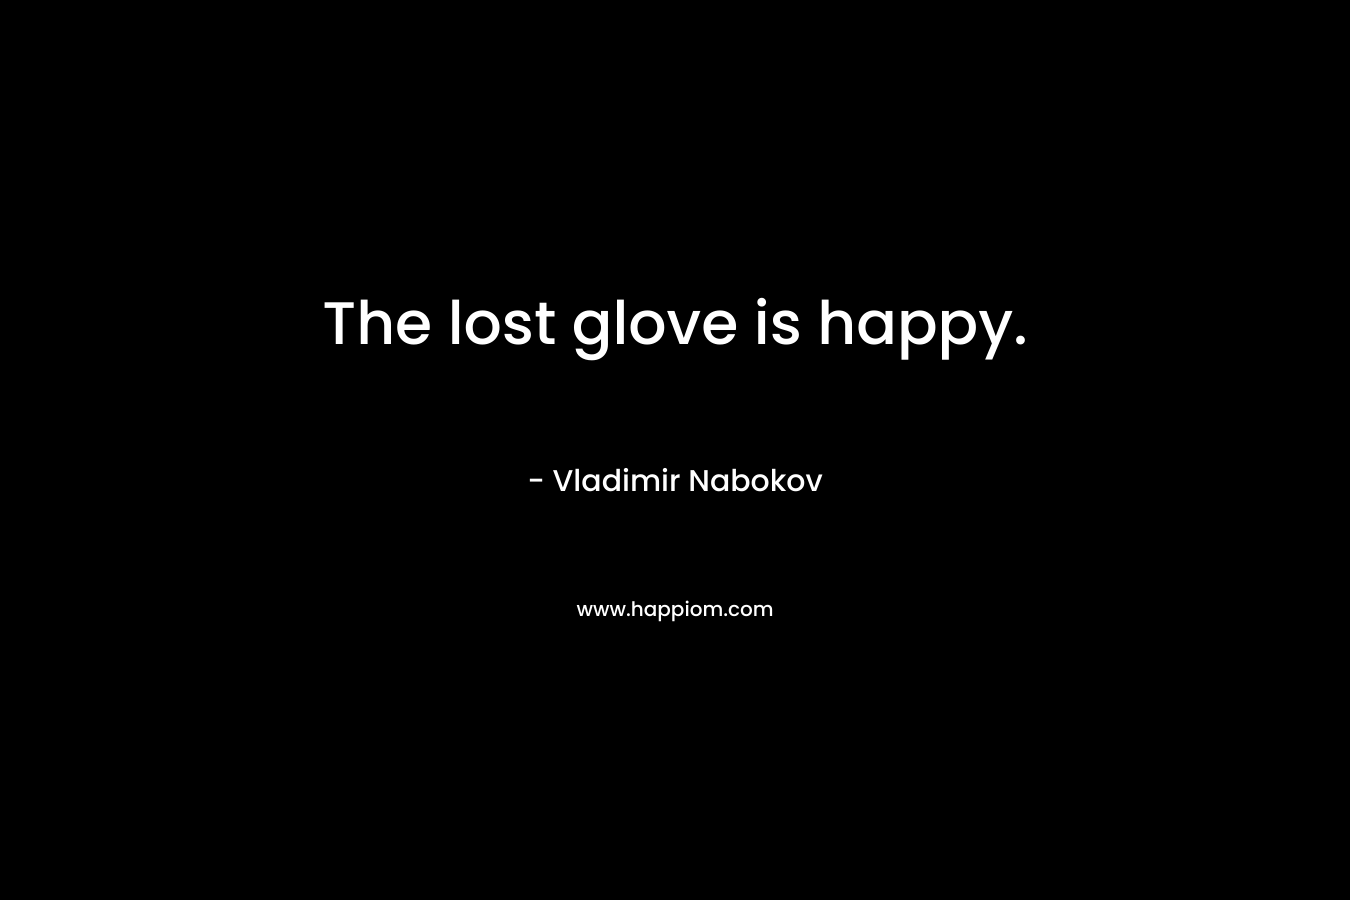 The lost glove is happy. – Vladimir Nabokov